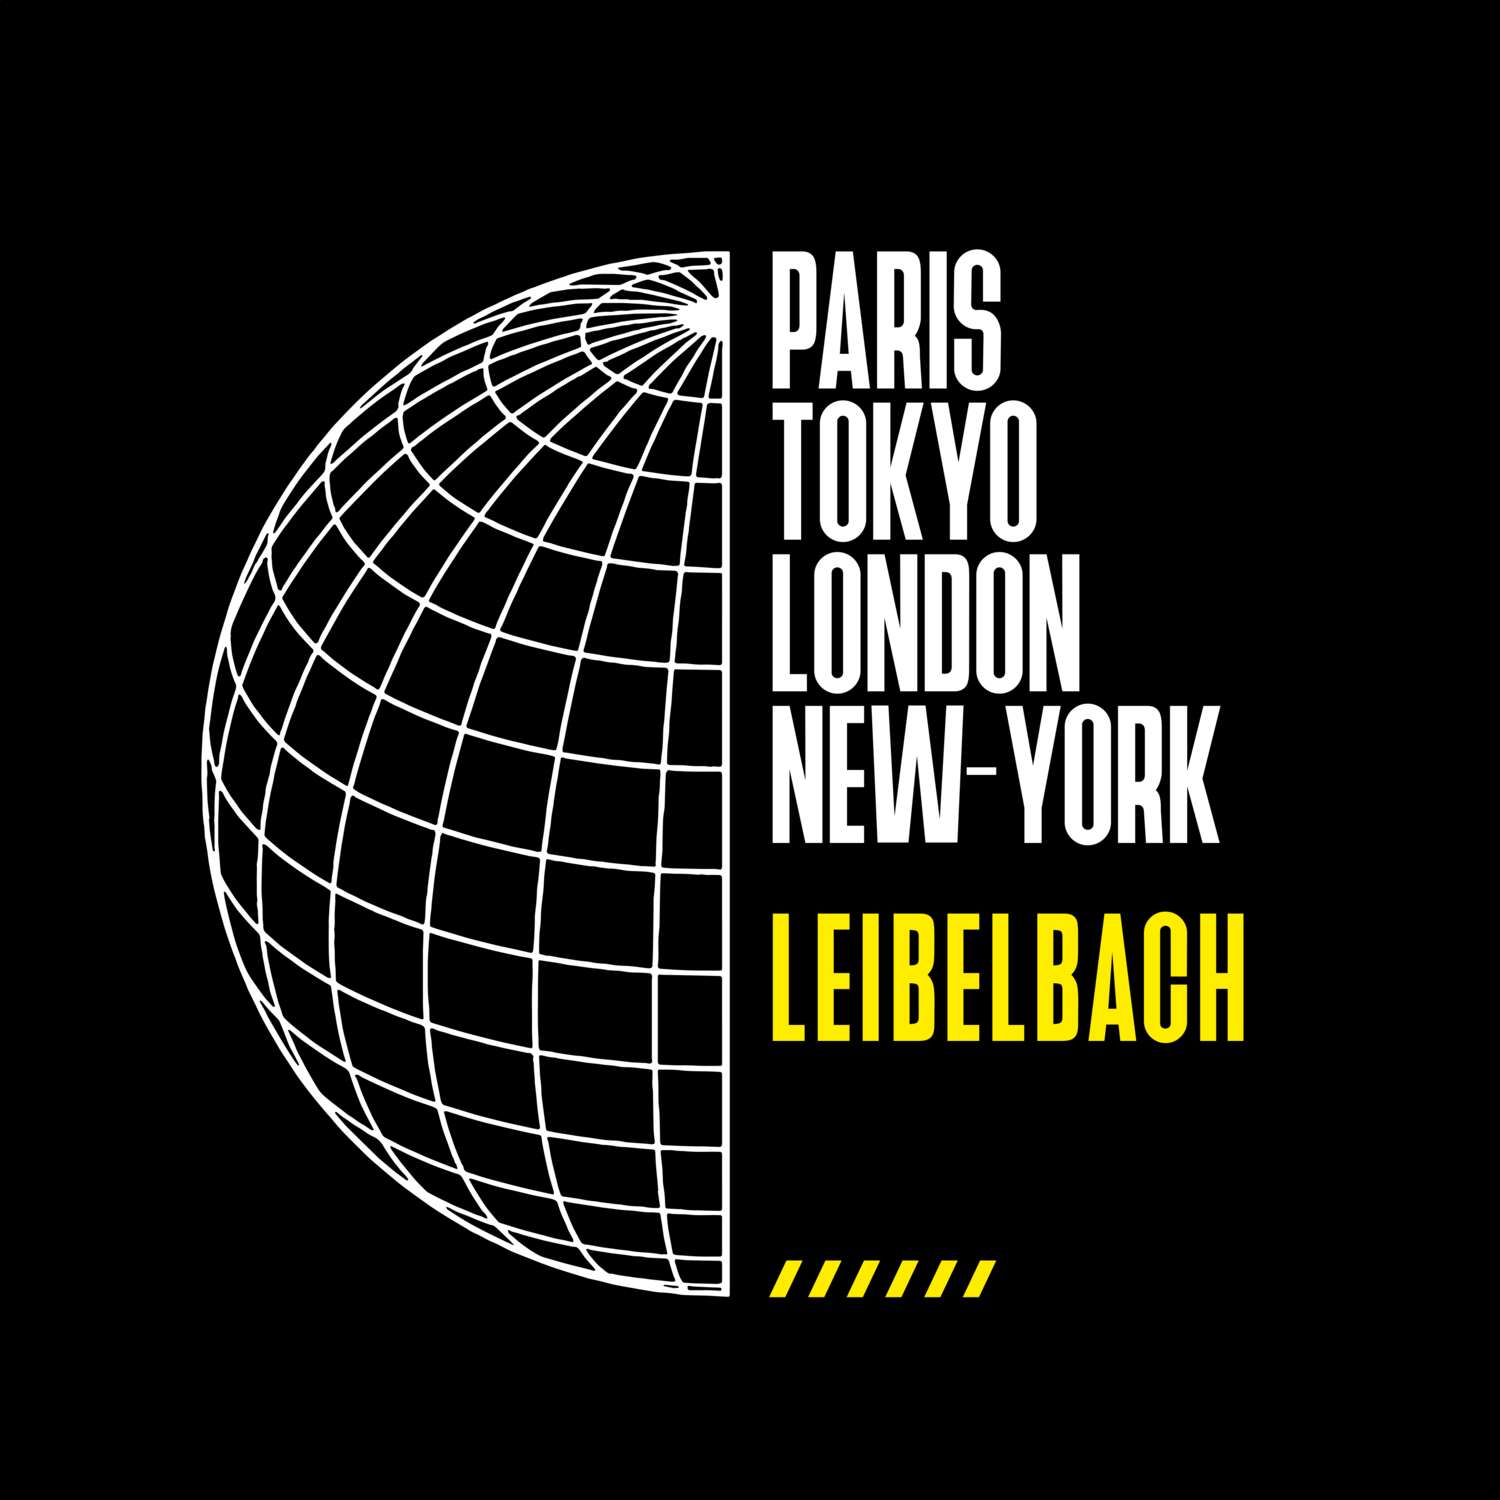 Leibelbach T-Shirt »Paris Tokyo London«